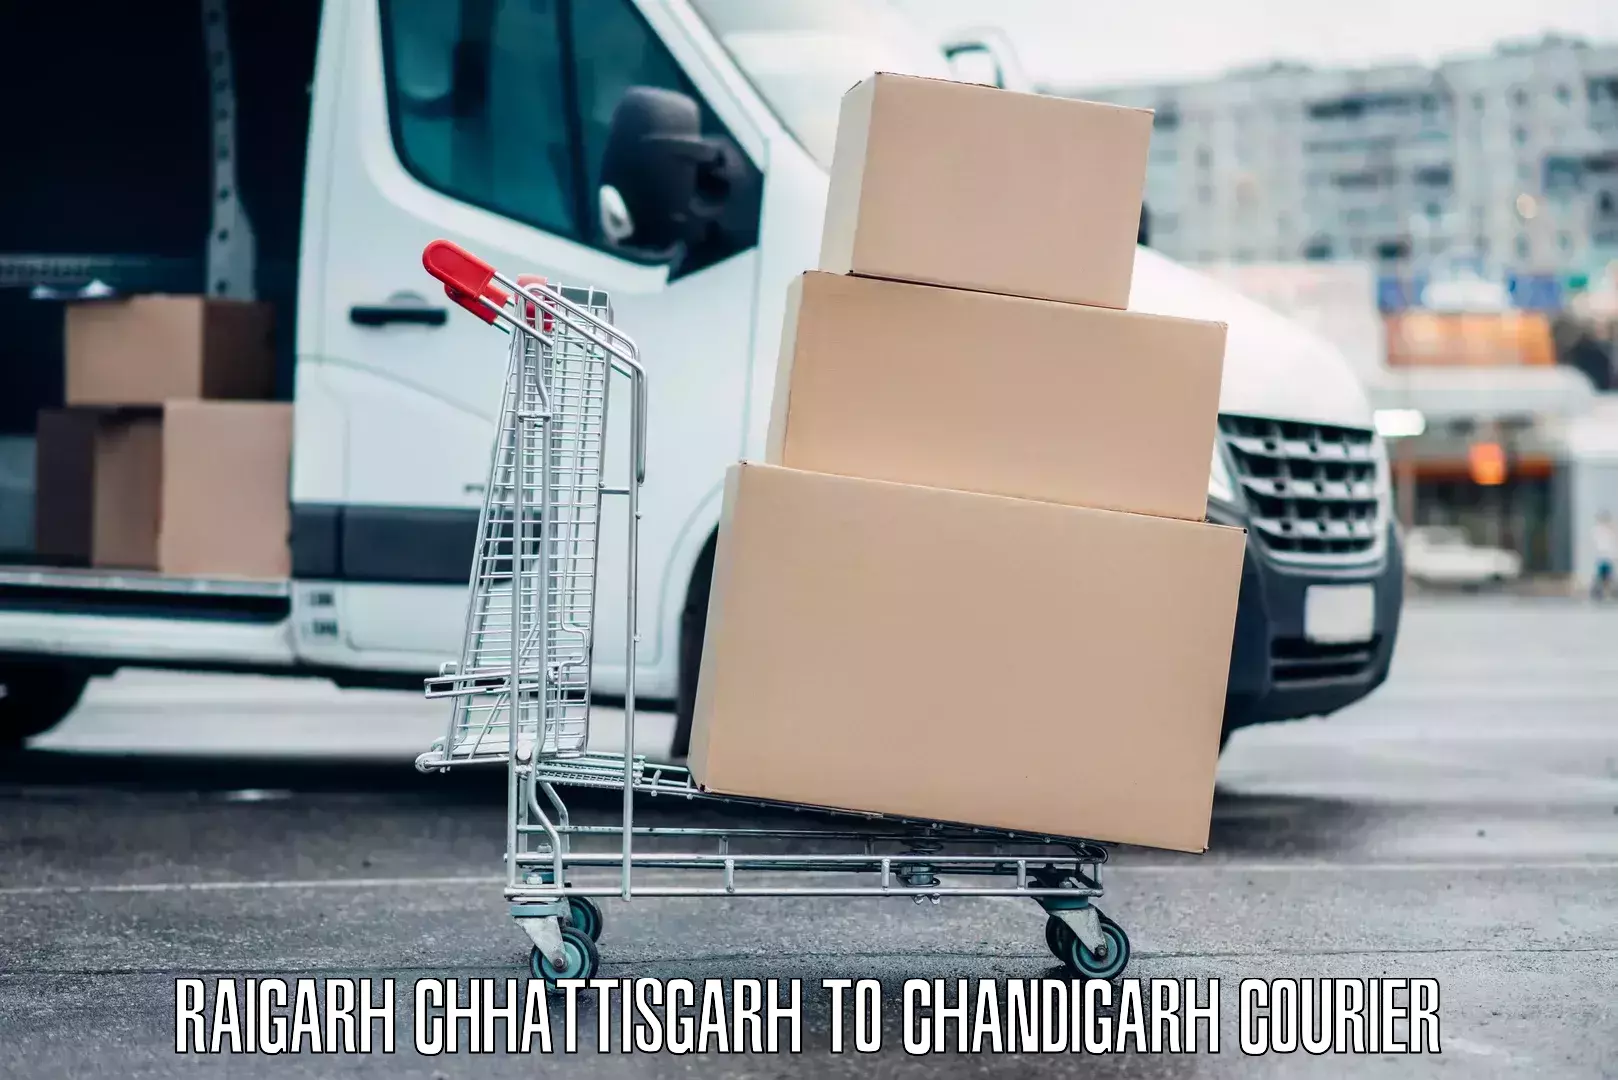 Same day luggage service Raigarh Chhattisgarh to Chandigarh